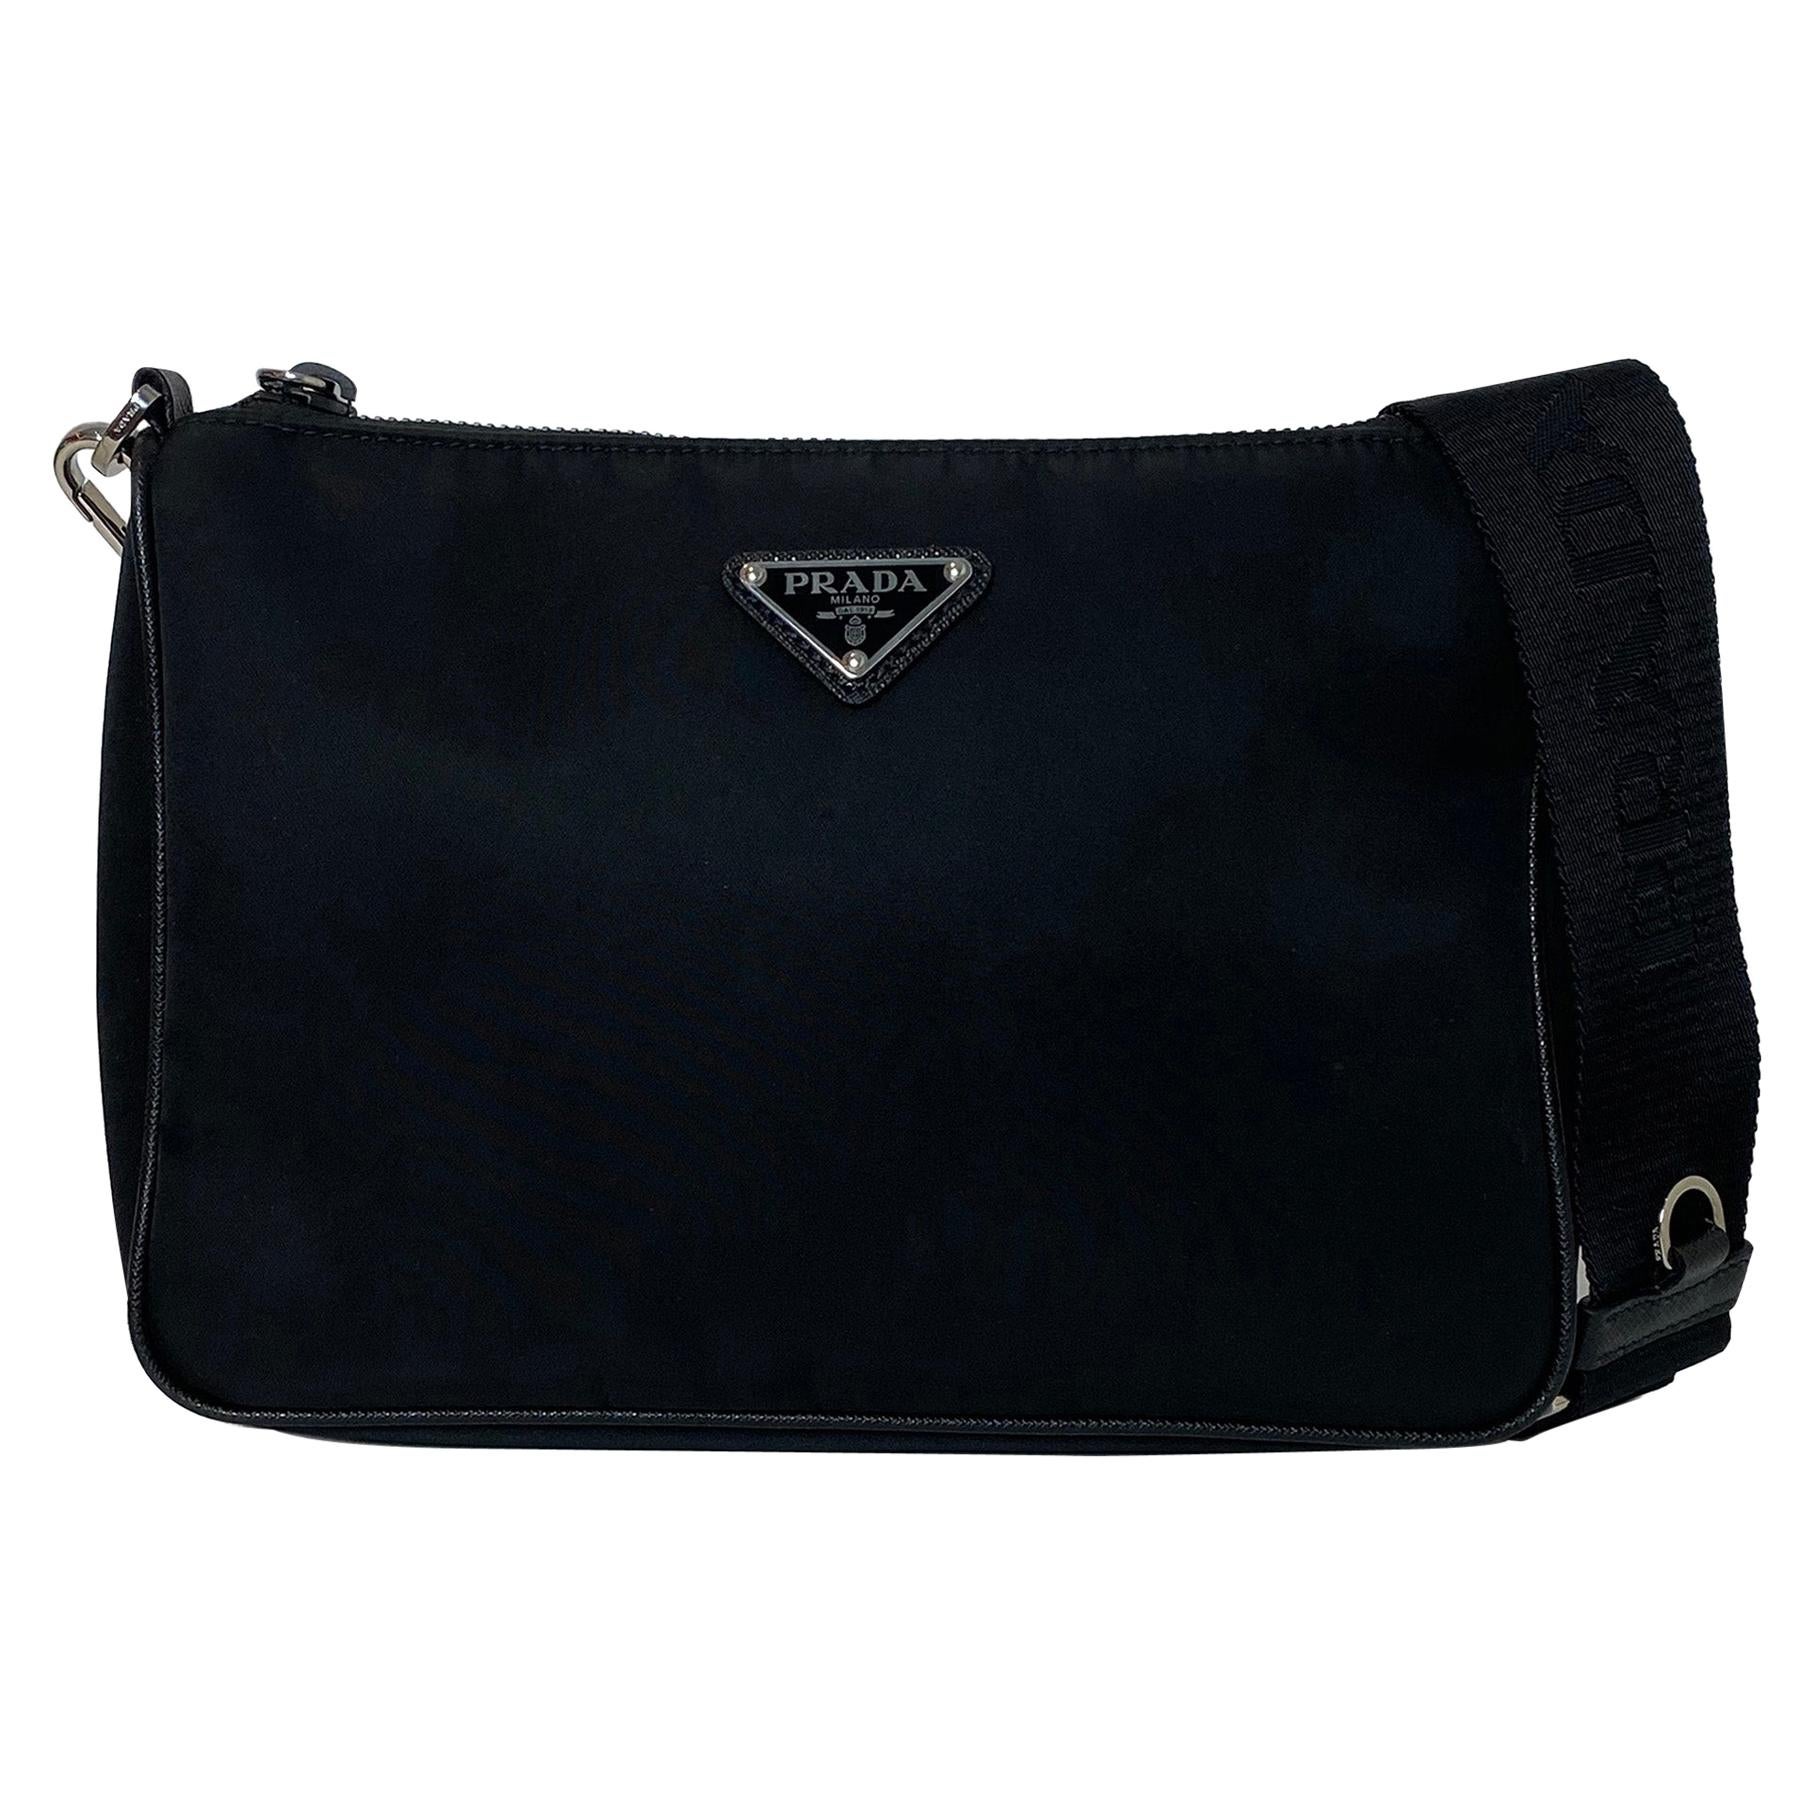 Prada 2020 Black Nylon and Saffiano Leather Unisex Messenger Bag rt. $1, 290